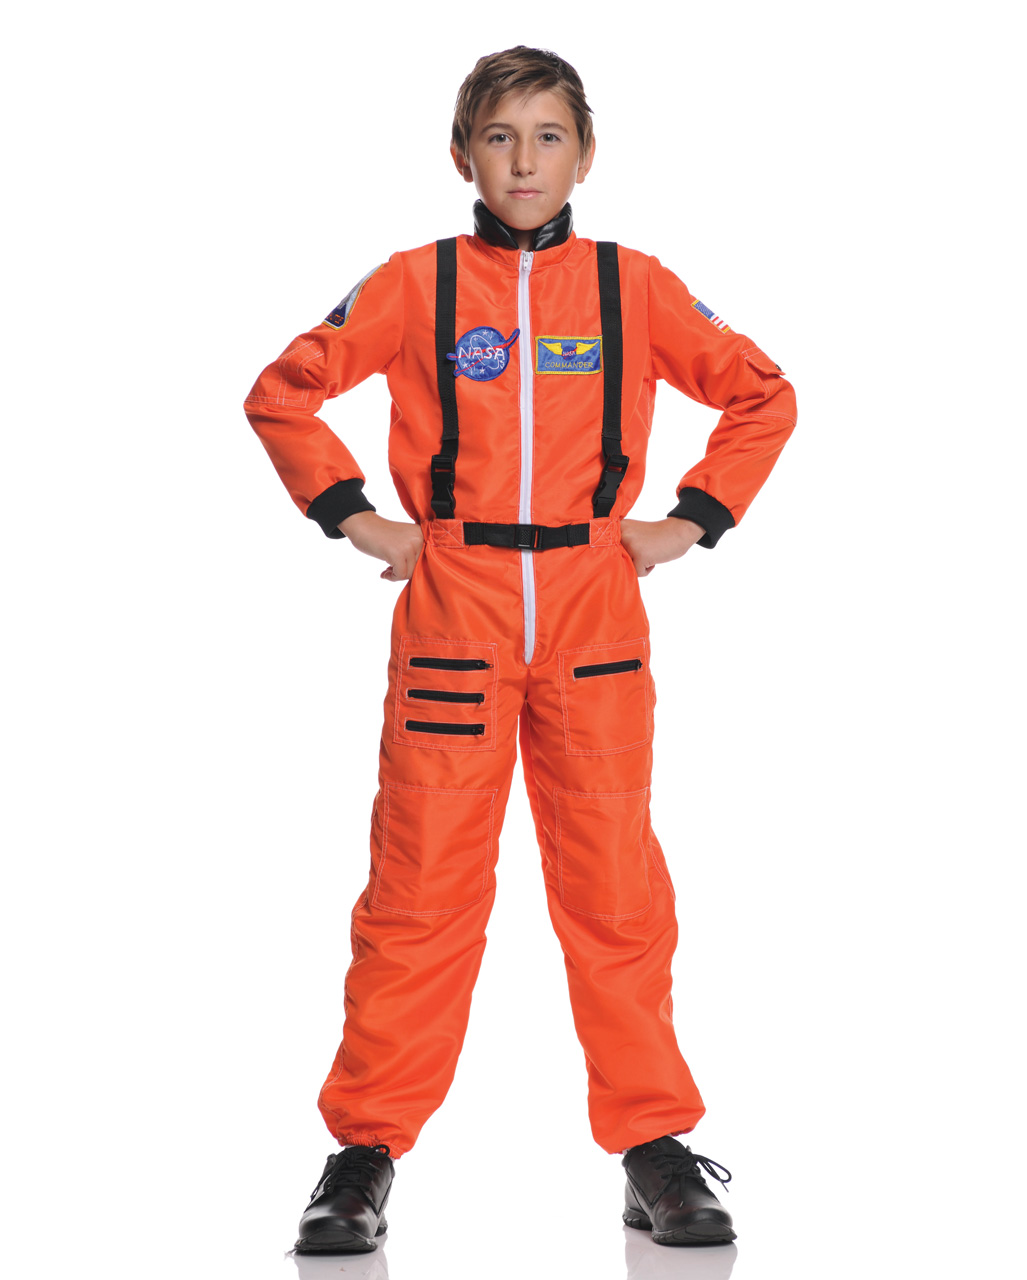 ASTRONAUT Raumfahrer Gr weiß Space Overall Karneval #1100 140 Kinder Kostüm 